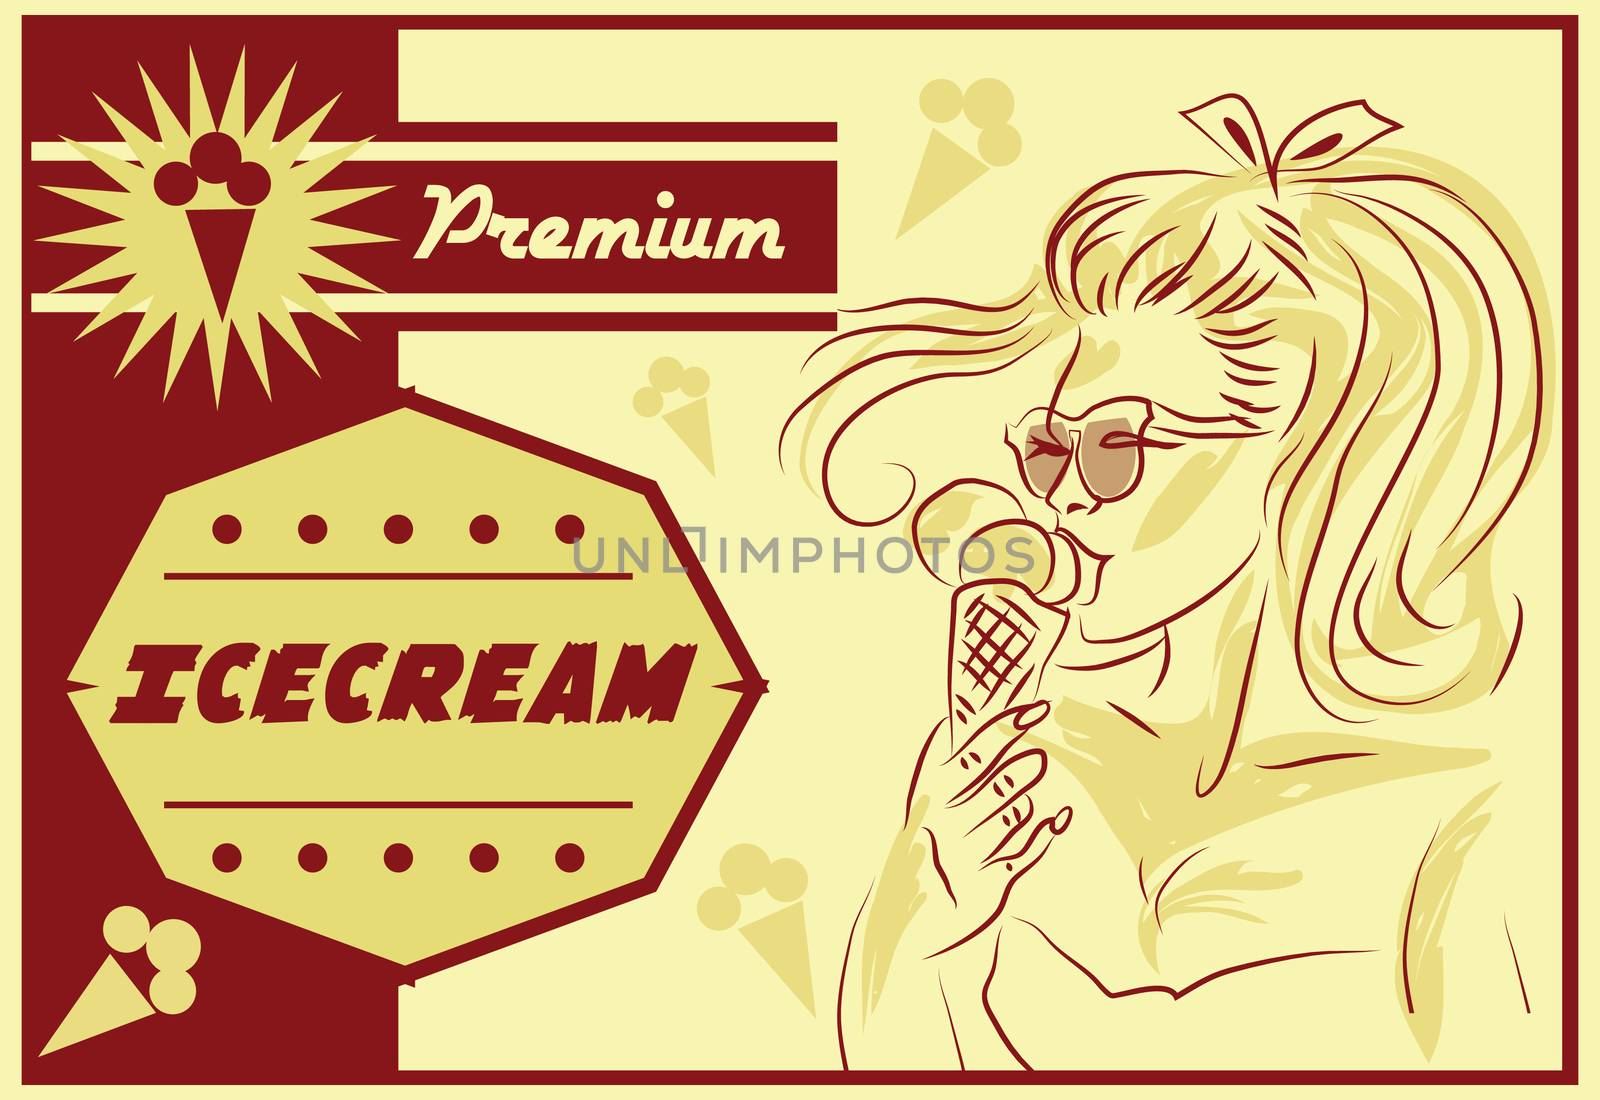 Retro Vintage Iceceam Background with Typography Retro Woman by tamaravector